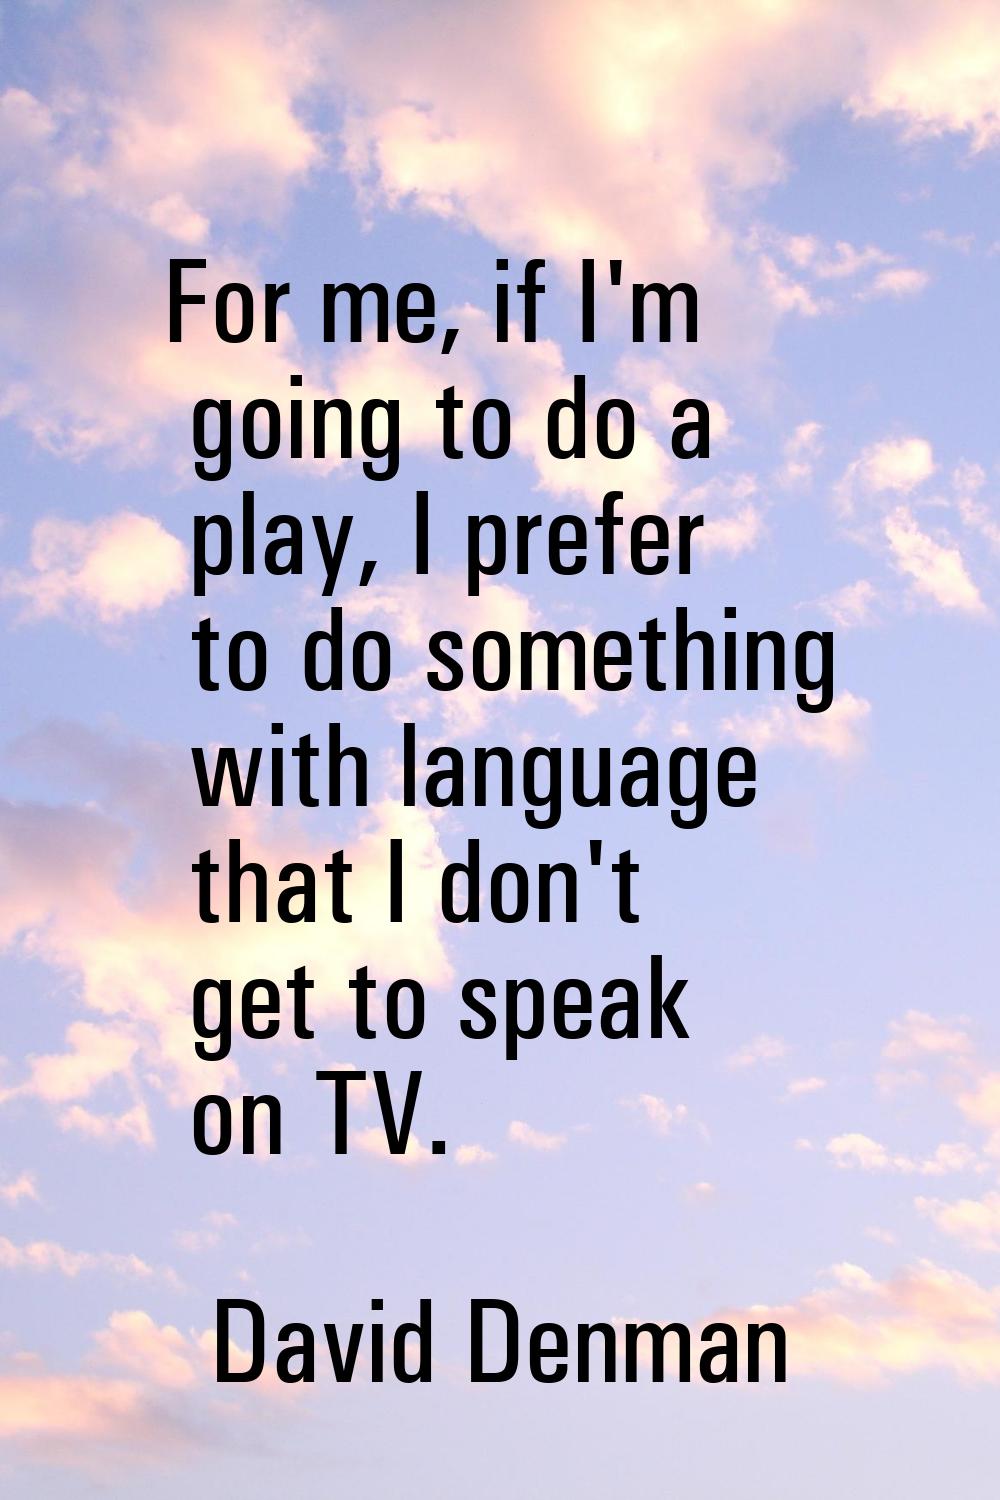 For me, if I'm going to do a play, I prefer to do something with language that I don't get to speak